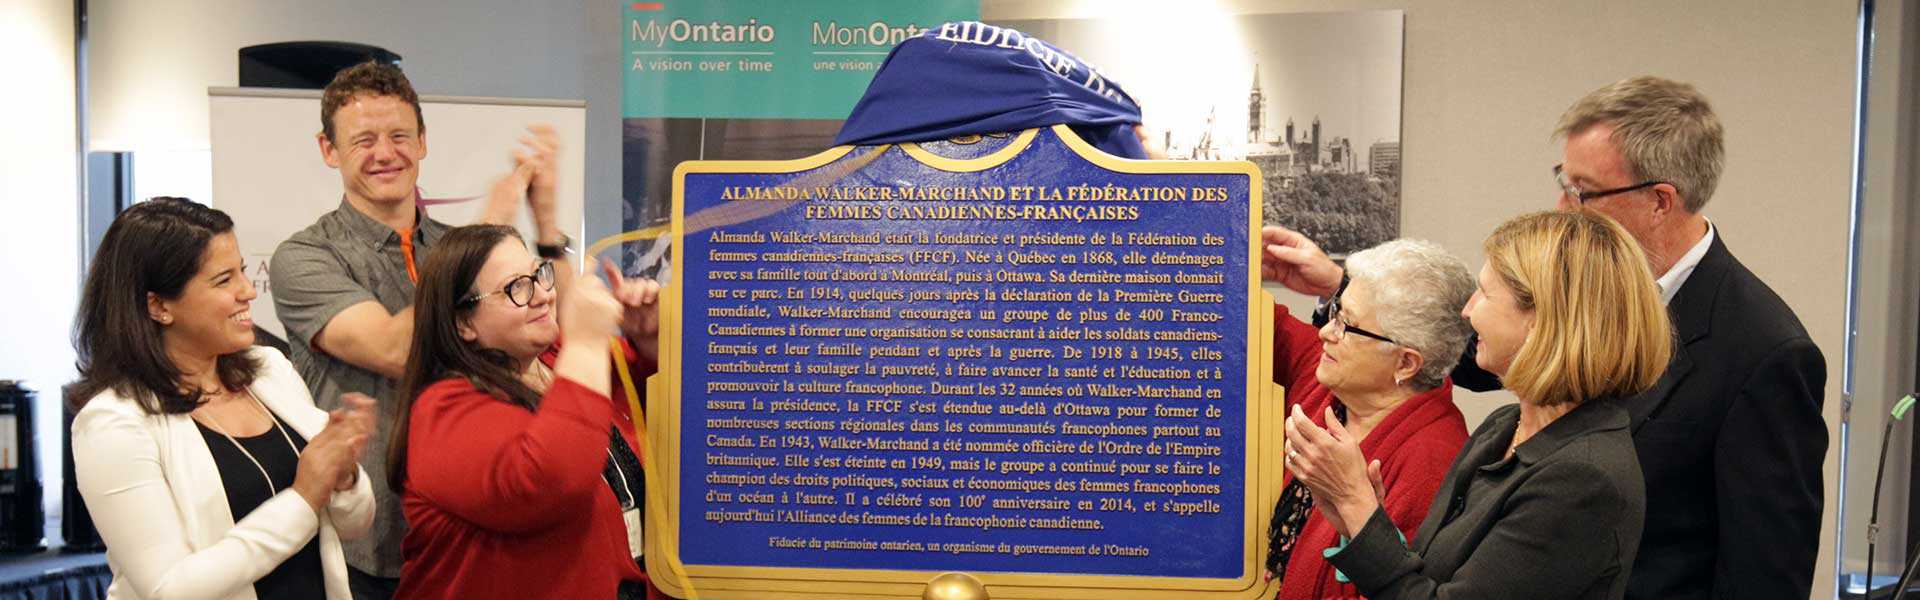 Unveiling of a provincial plaque commemorating Almanda Walker-Marchand and the Fédération nationale des Femmes Canadiennes-Françaises in 2018